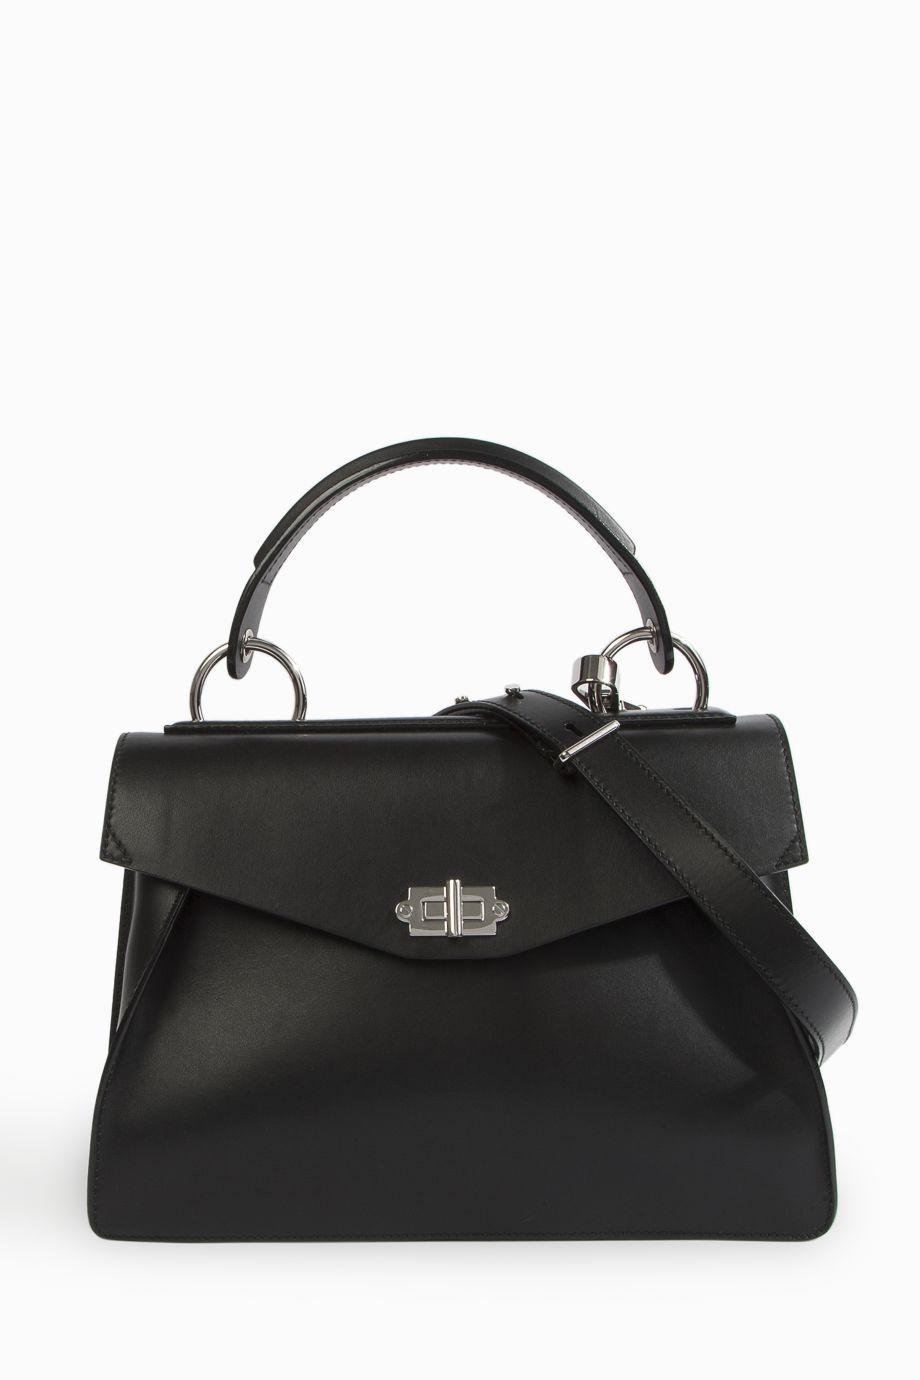 PROENZA SCHOULER Hava Medium Top Handle Bag, Black | ModeSens